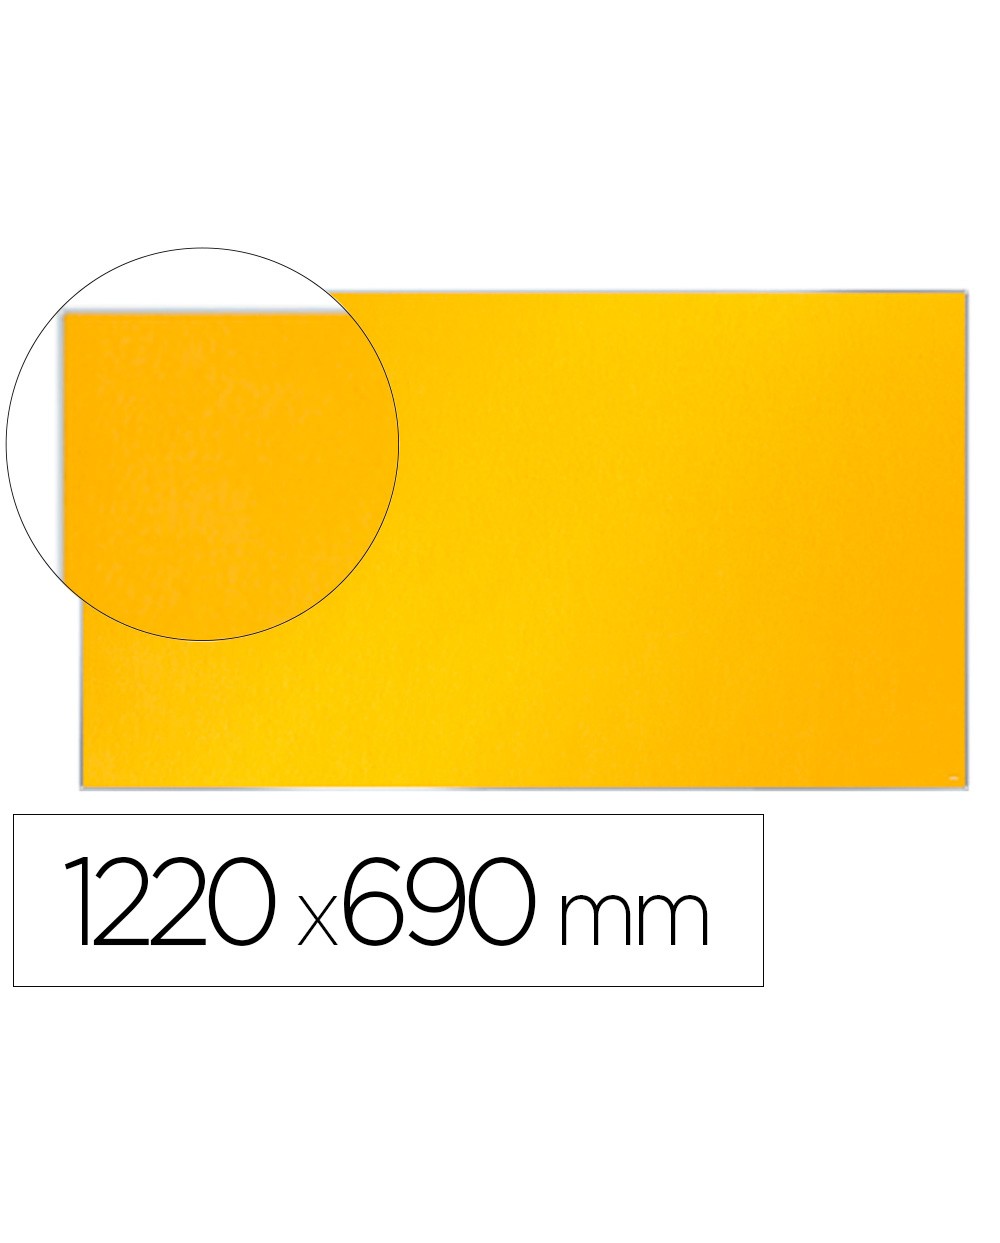 Tablero de anuncios nobo impression pro fieltro amarillo formato panoramico 55 1220x690 mm